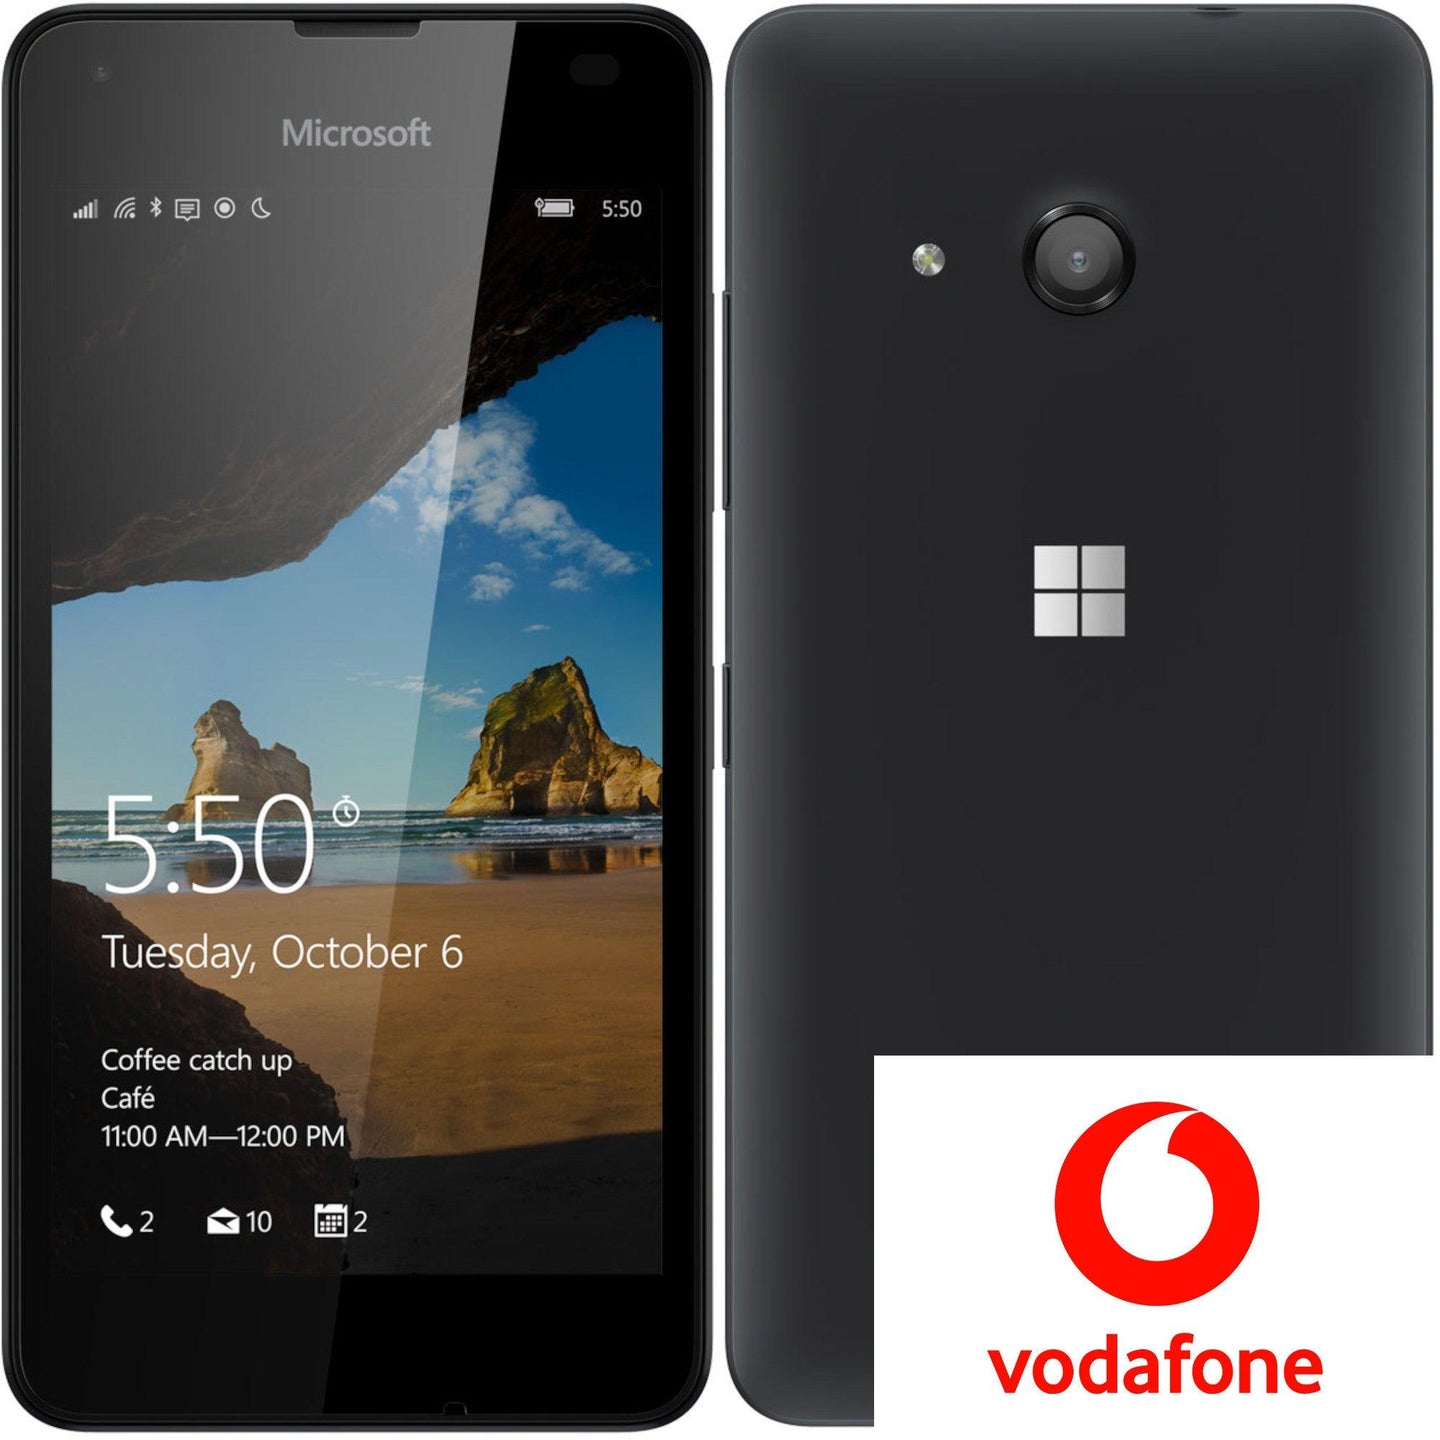 Microsoft Lumia 550 (RM-1127) Black, 8GB, Vodafone Locked, 4g